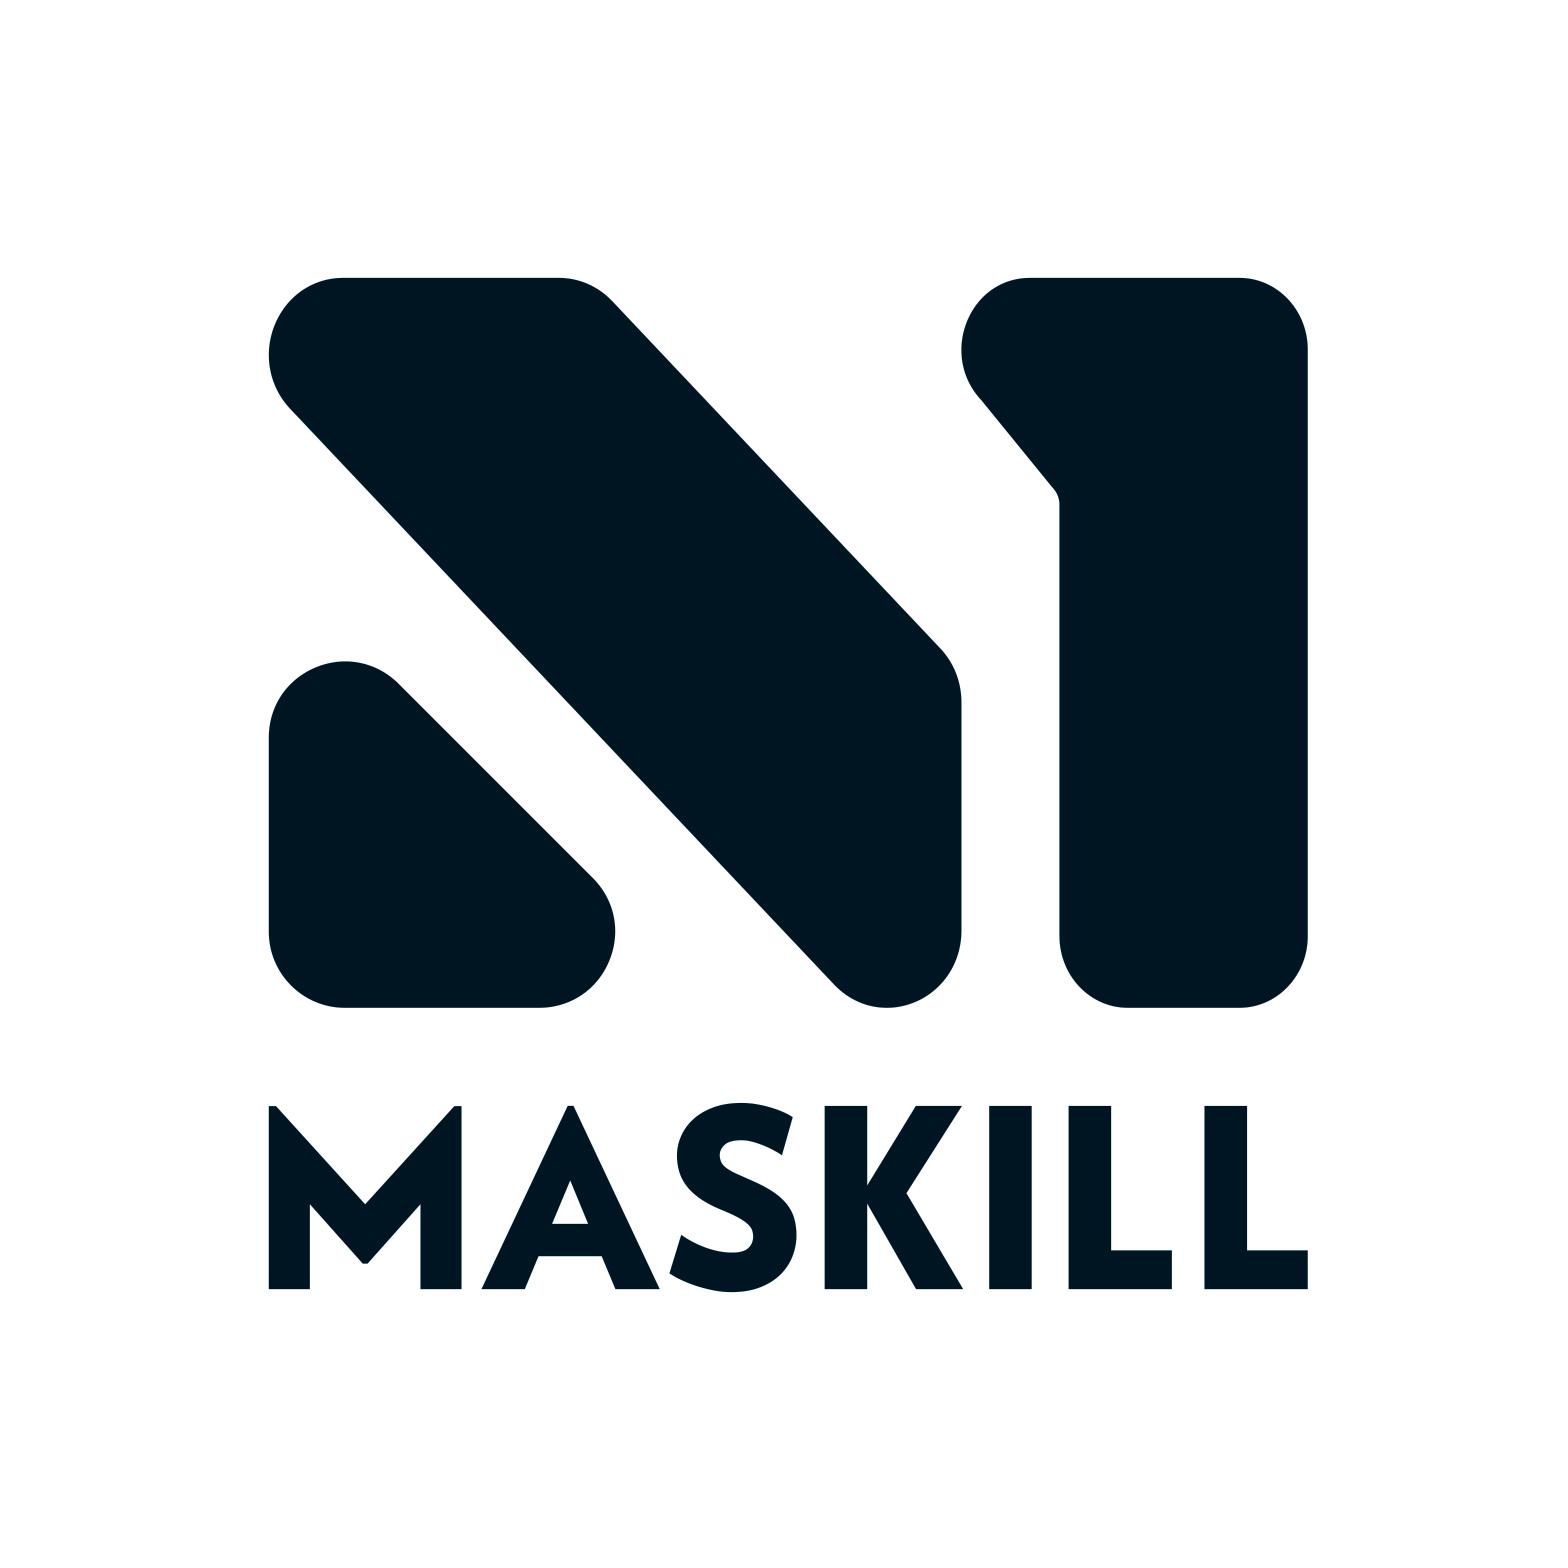 Maskill Logo